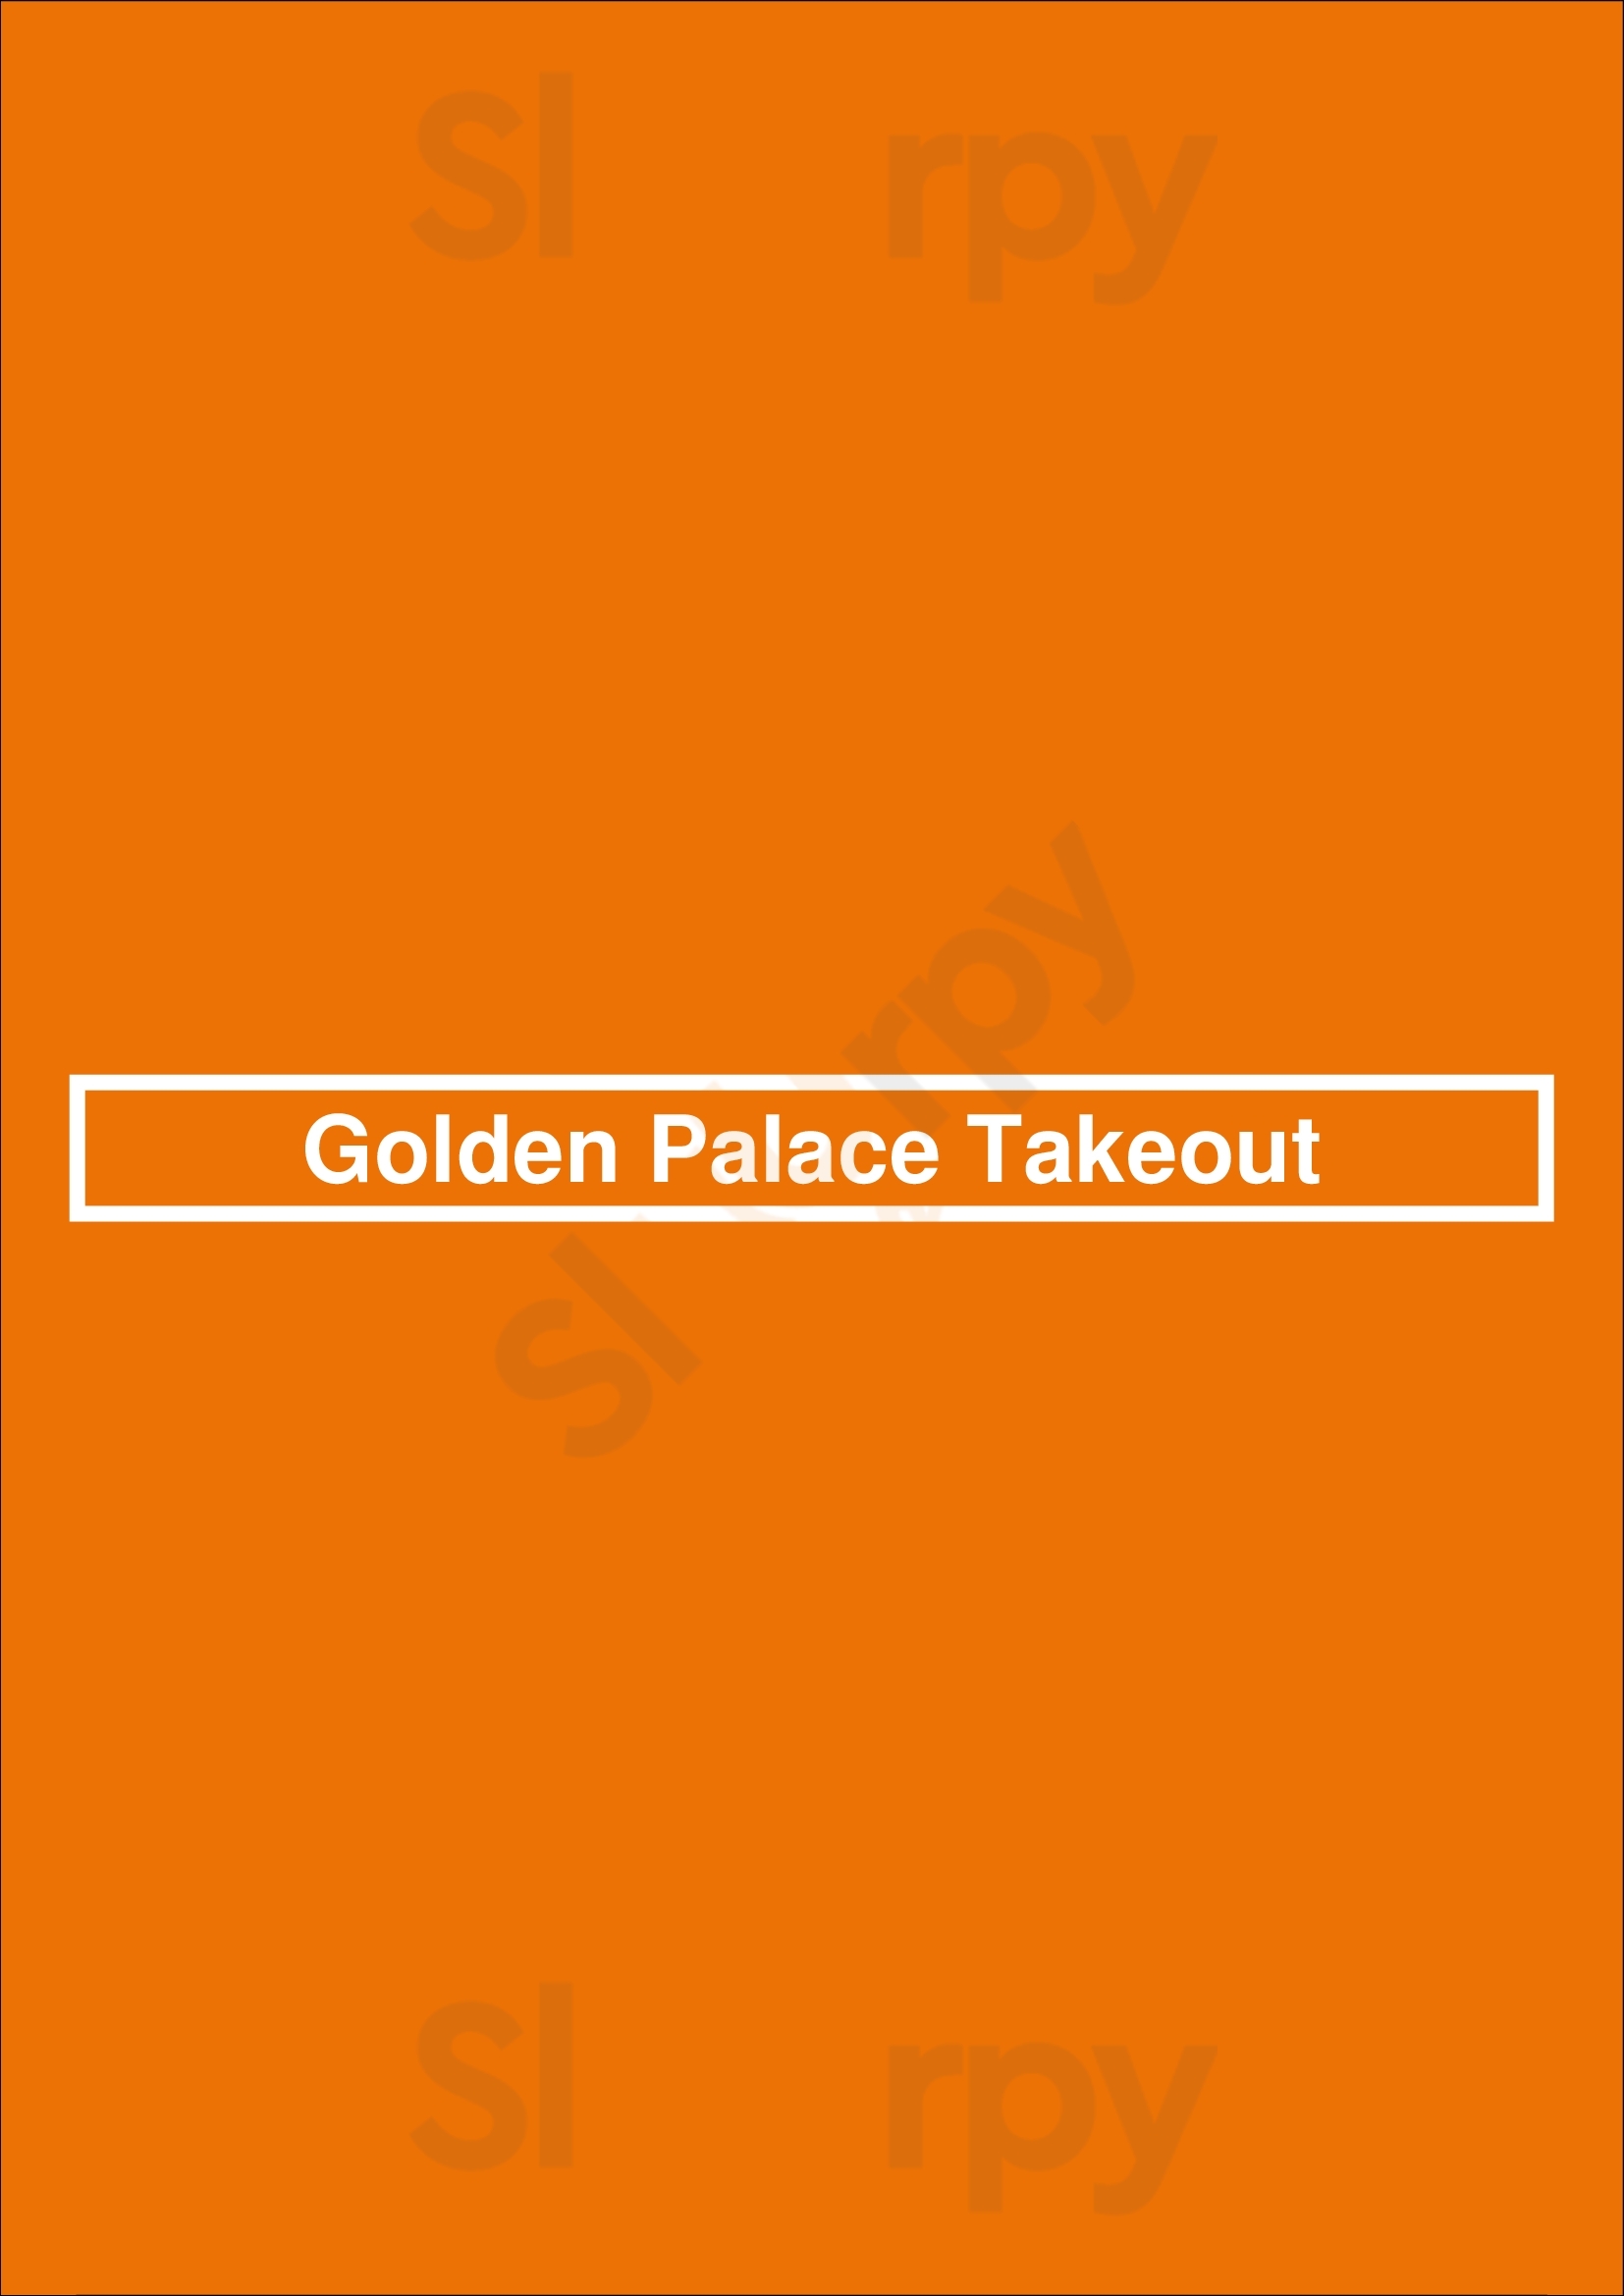 Golden Palace Takeout Oakville Menu - 1